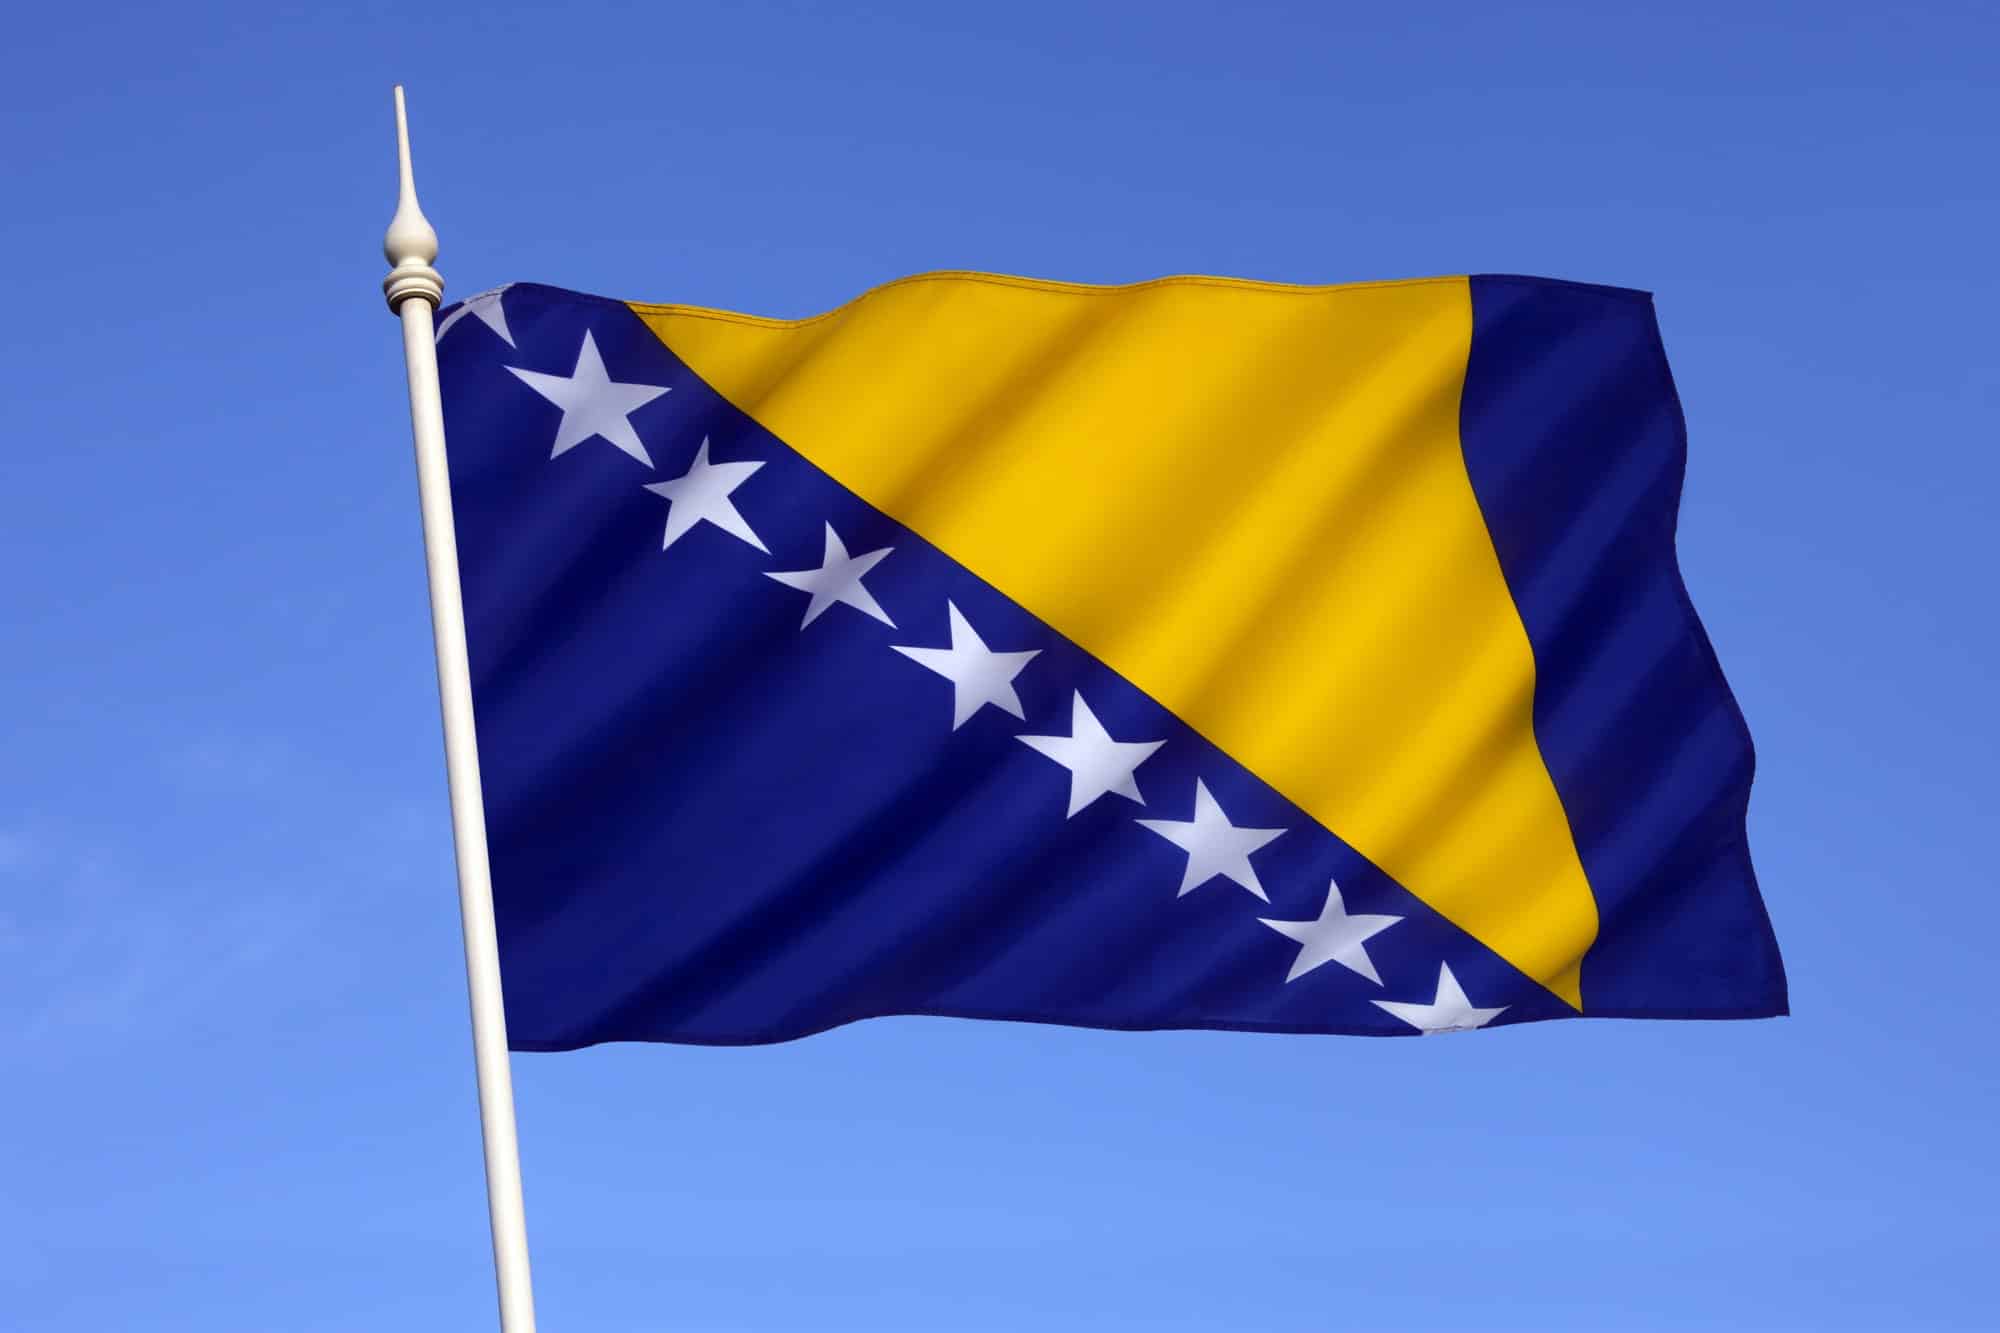 the national flag of bosnia and herzegovina